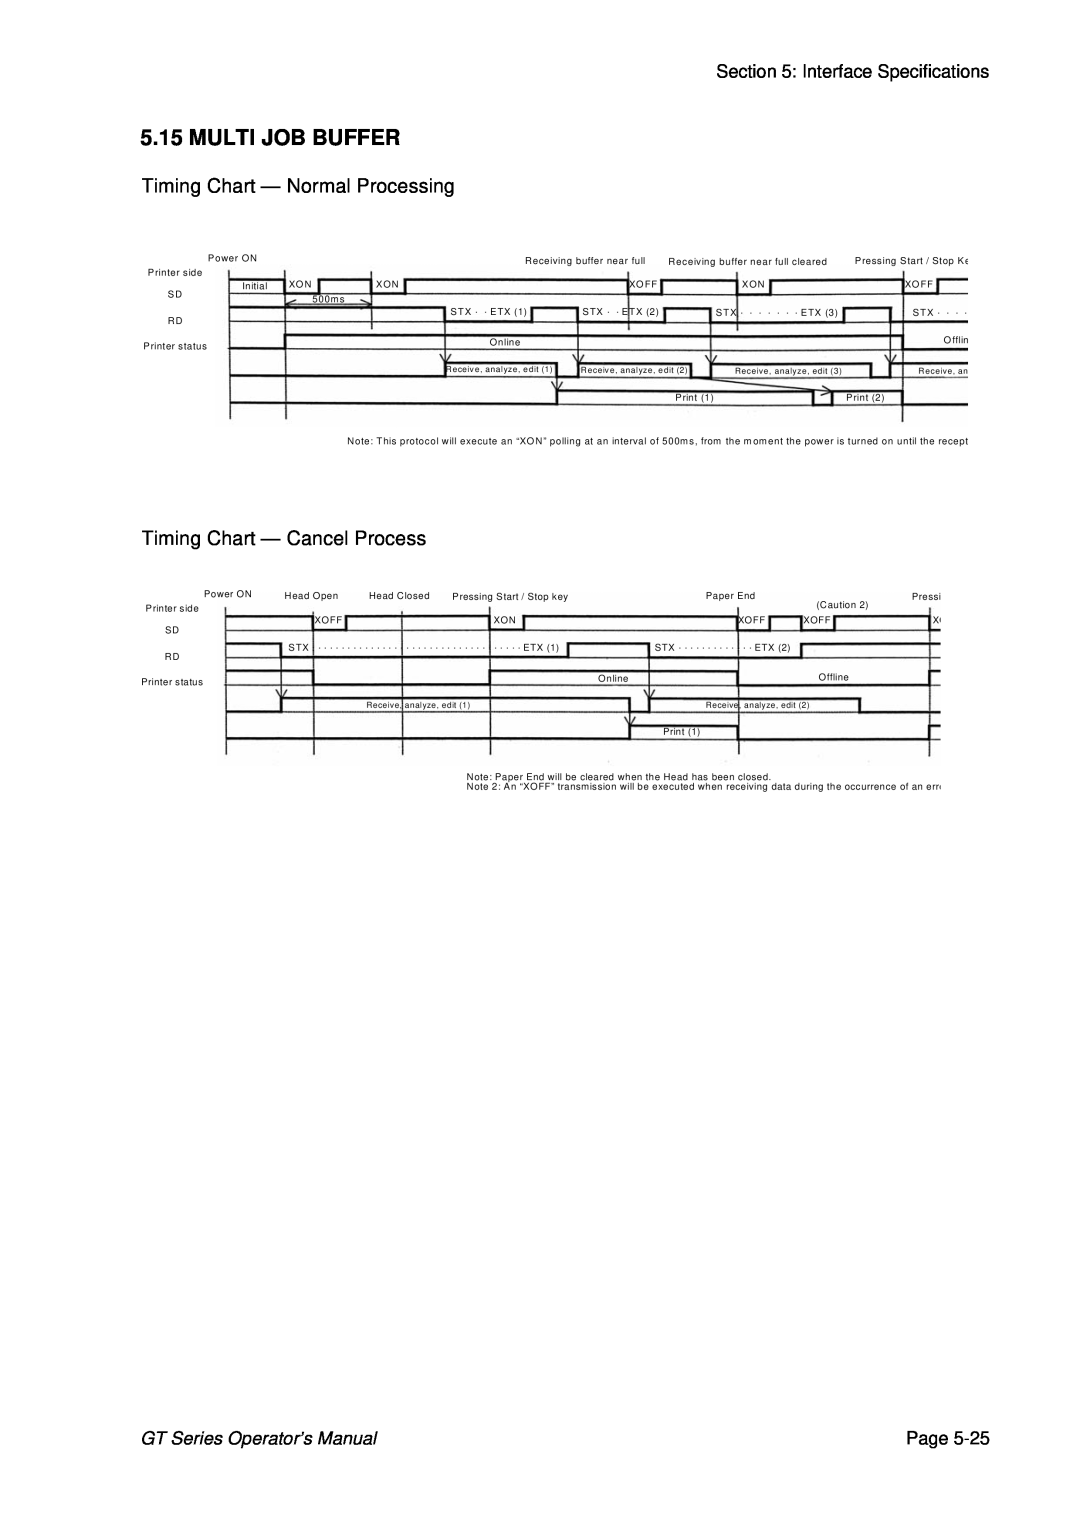 SATO GT424 Multi Job Buffer, Timing Chart - Normal Processing, Timing Chart - Cancel Process, GT Series Operator’s Manual 